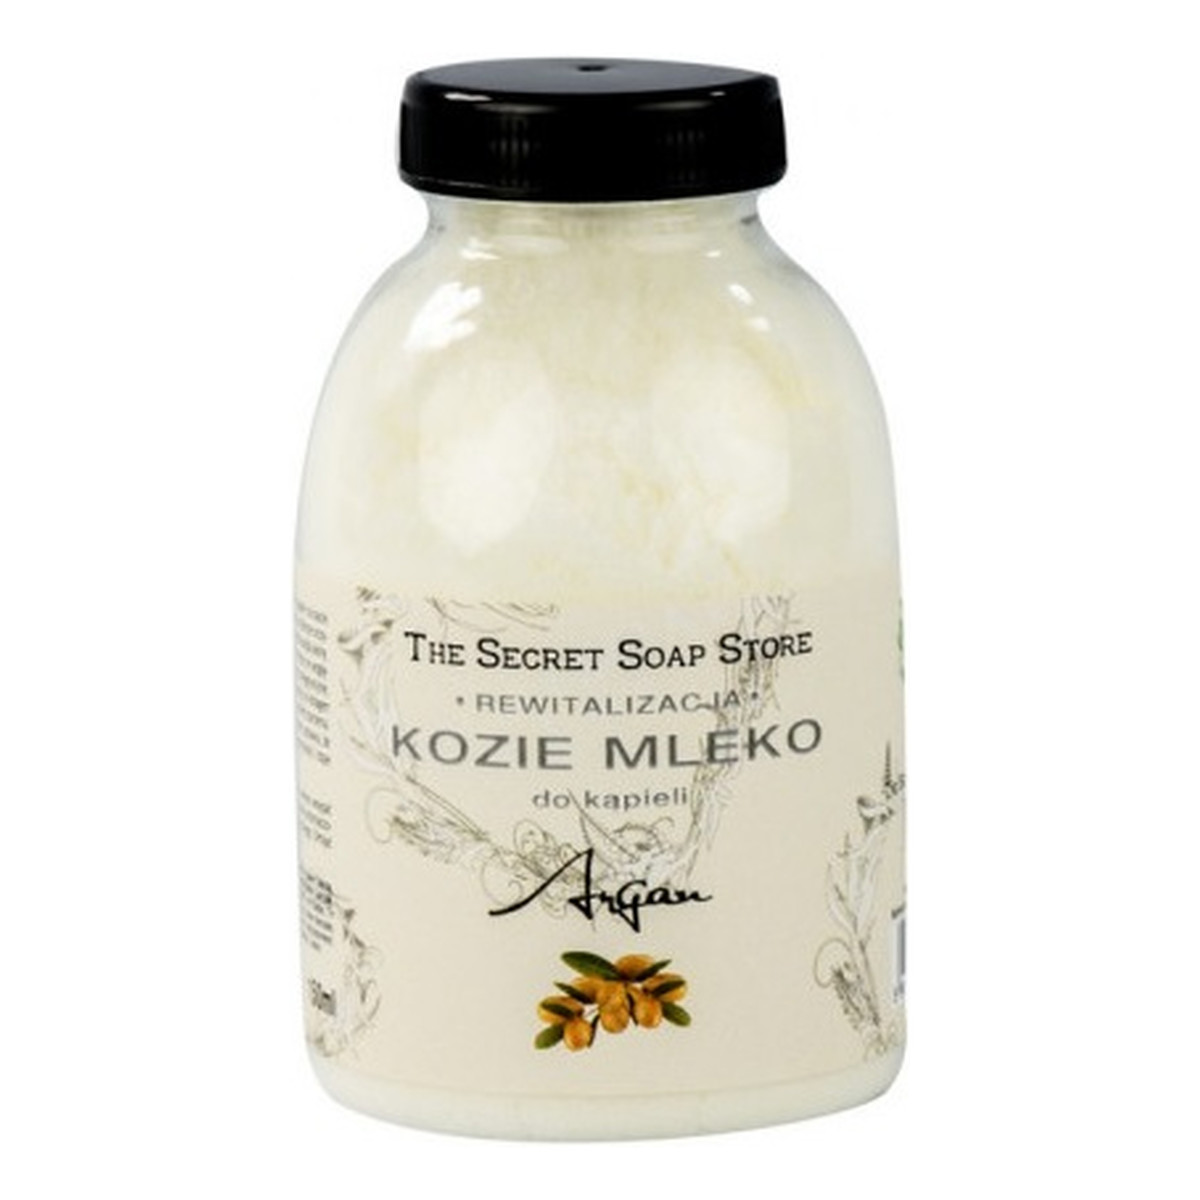 The Secret Soap Store Kozie mleko do kąpieli argan 250g